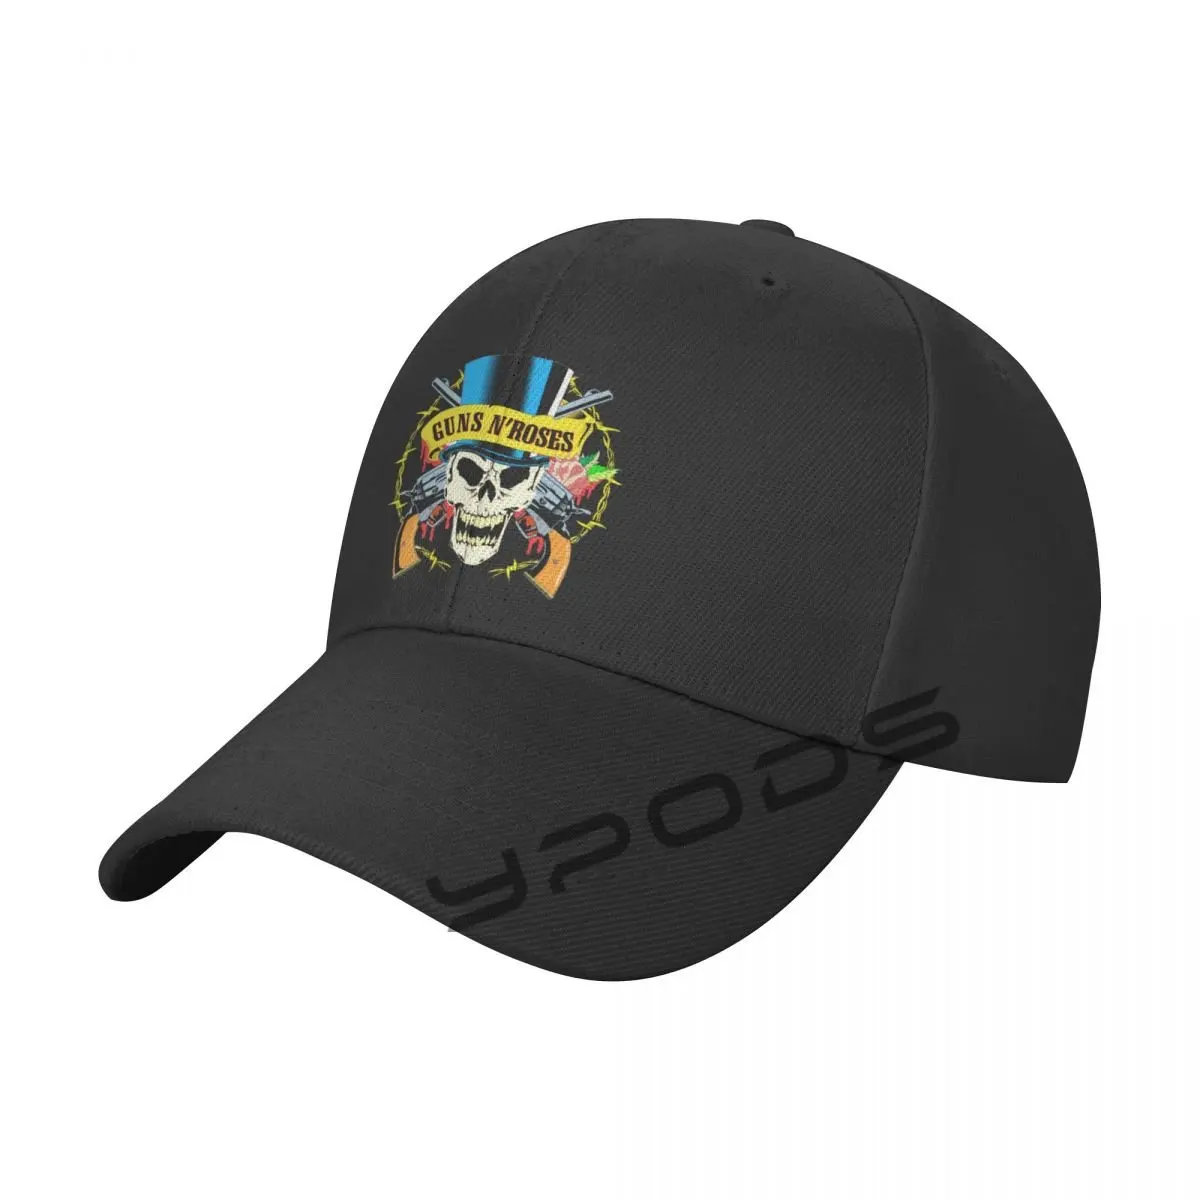 

Guns N Roses Baseball Caps For Men Snapback Plain Solid Color Gorras Caps Hats Fashion Casquette Bone FemaLe Dad Cap